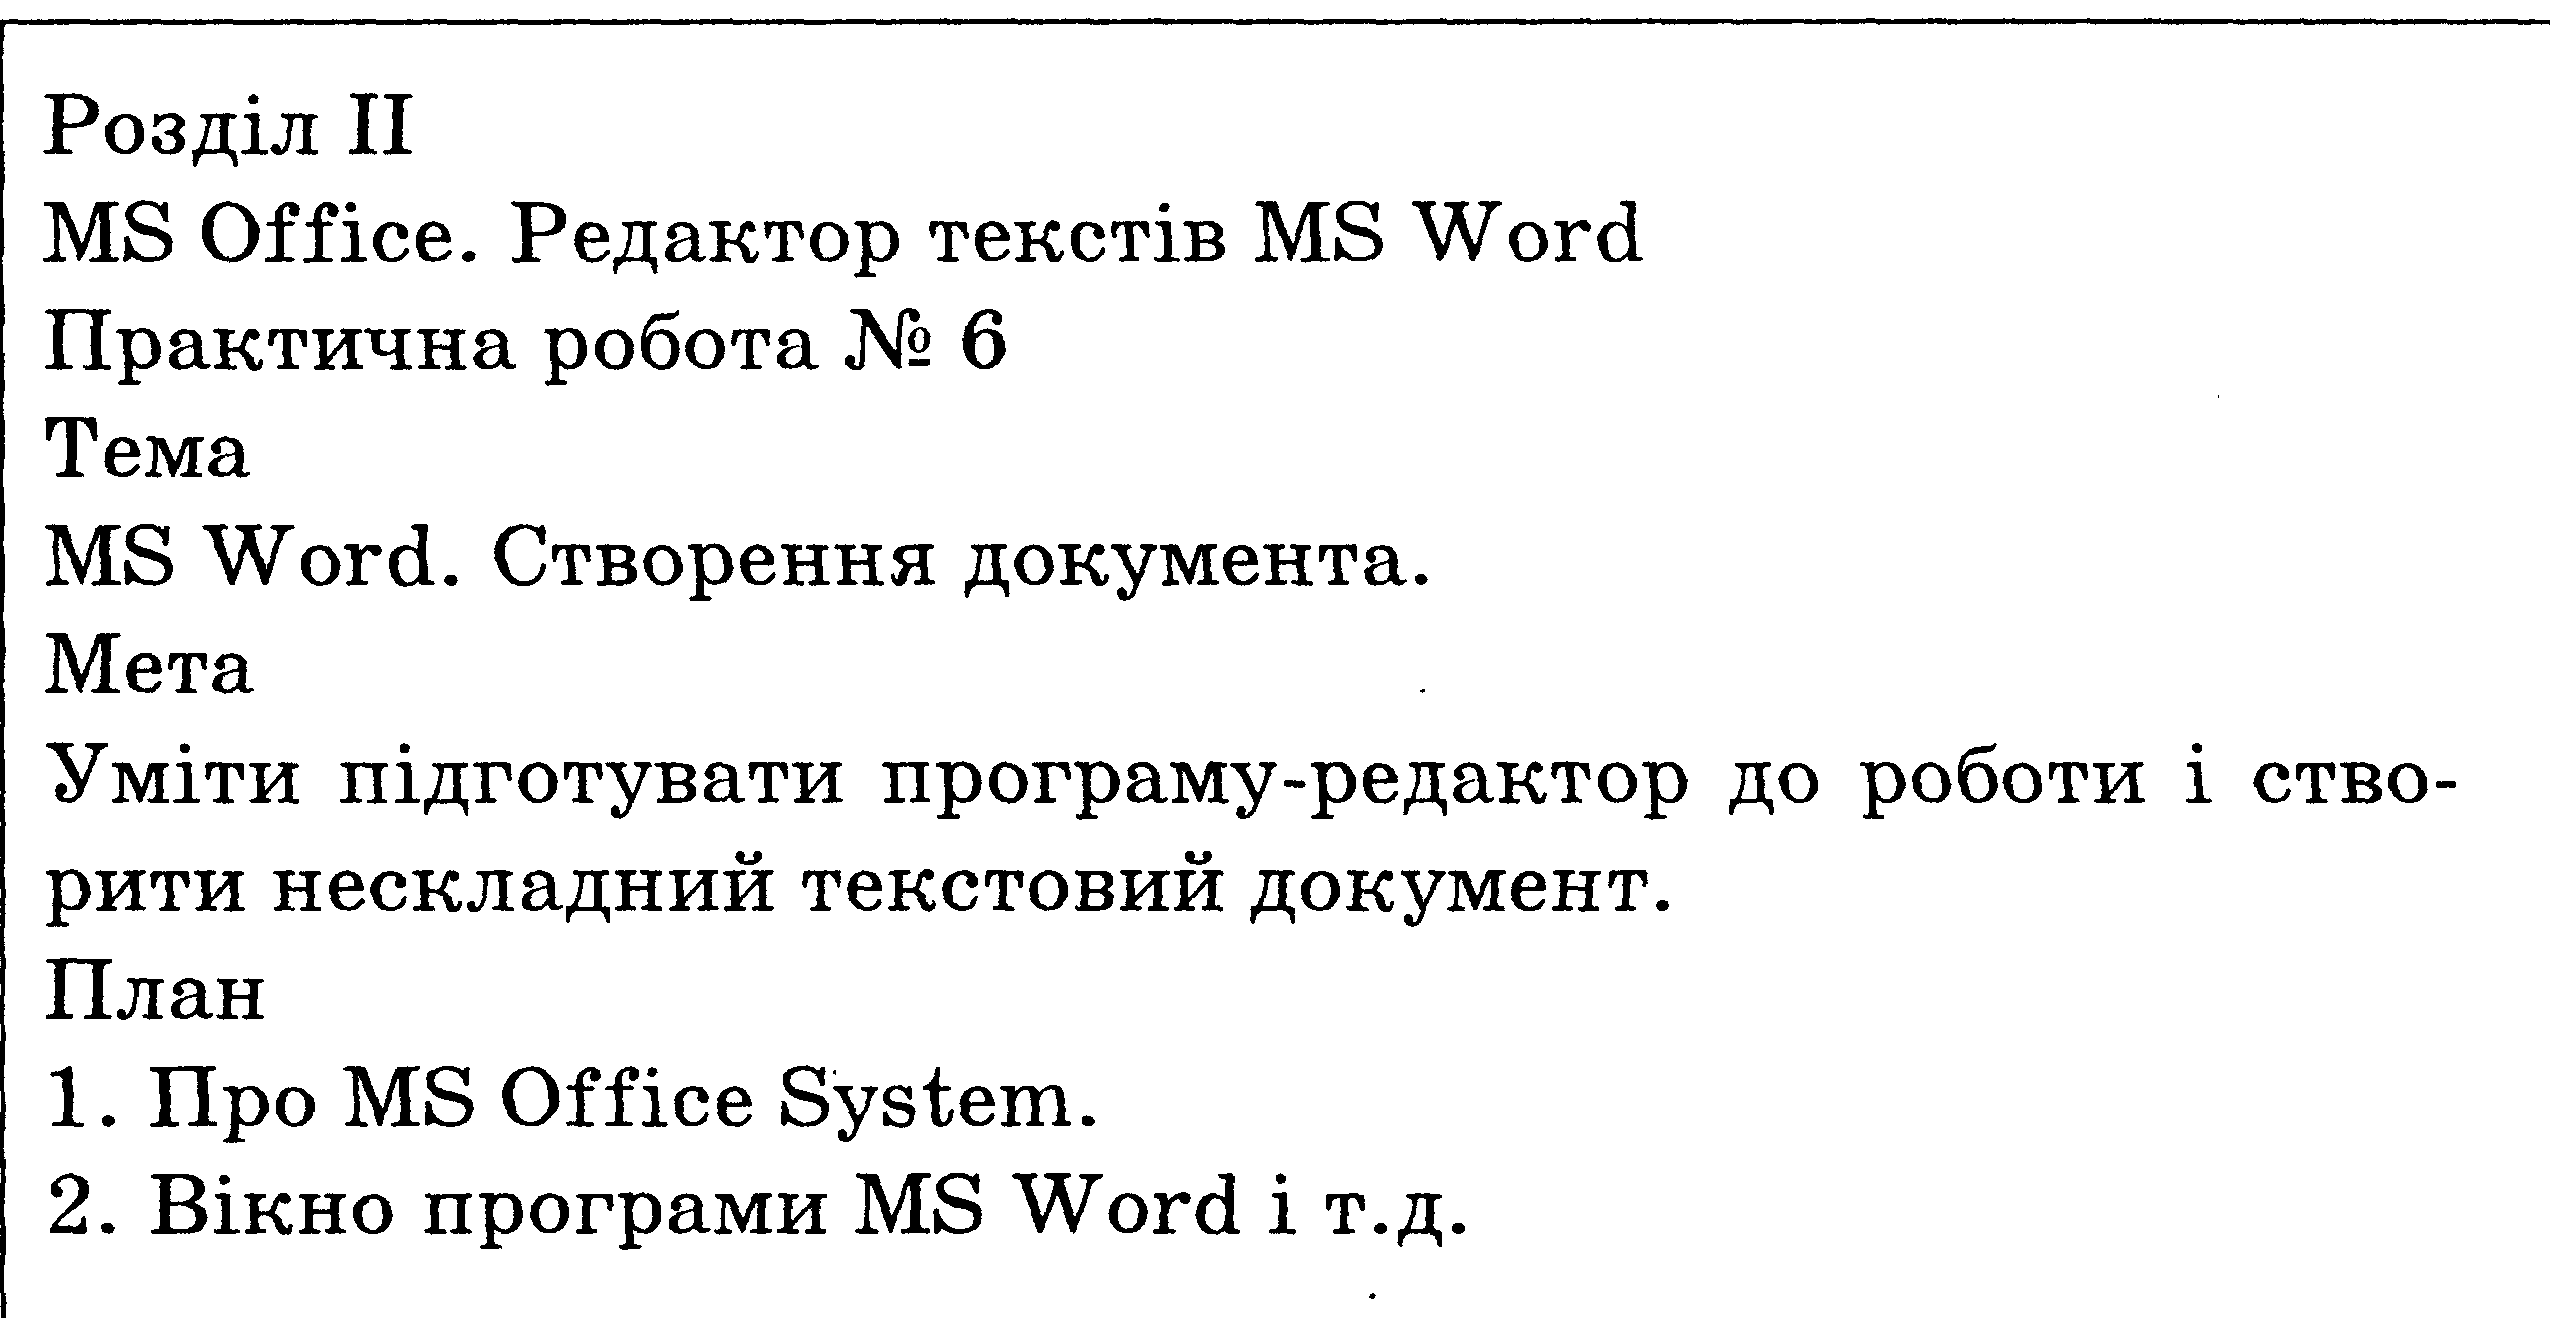 Практична робота №1. MS Word. Створення документа - student2.ru